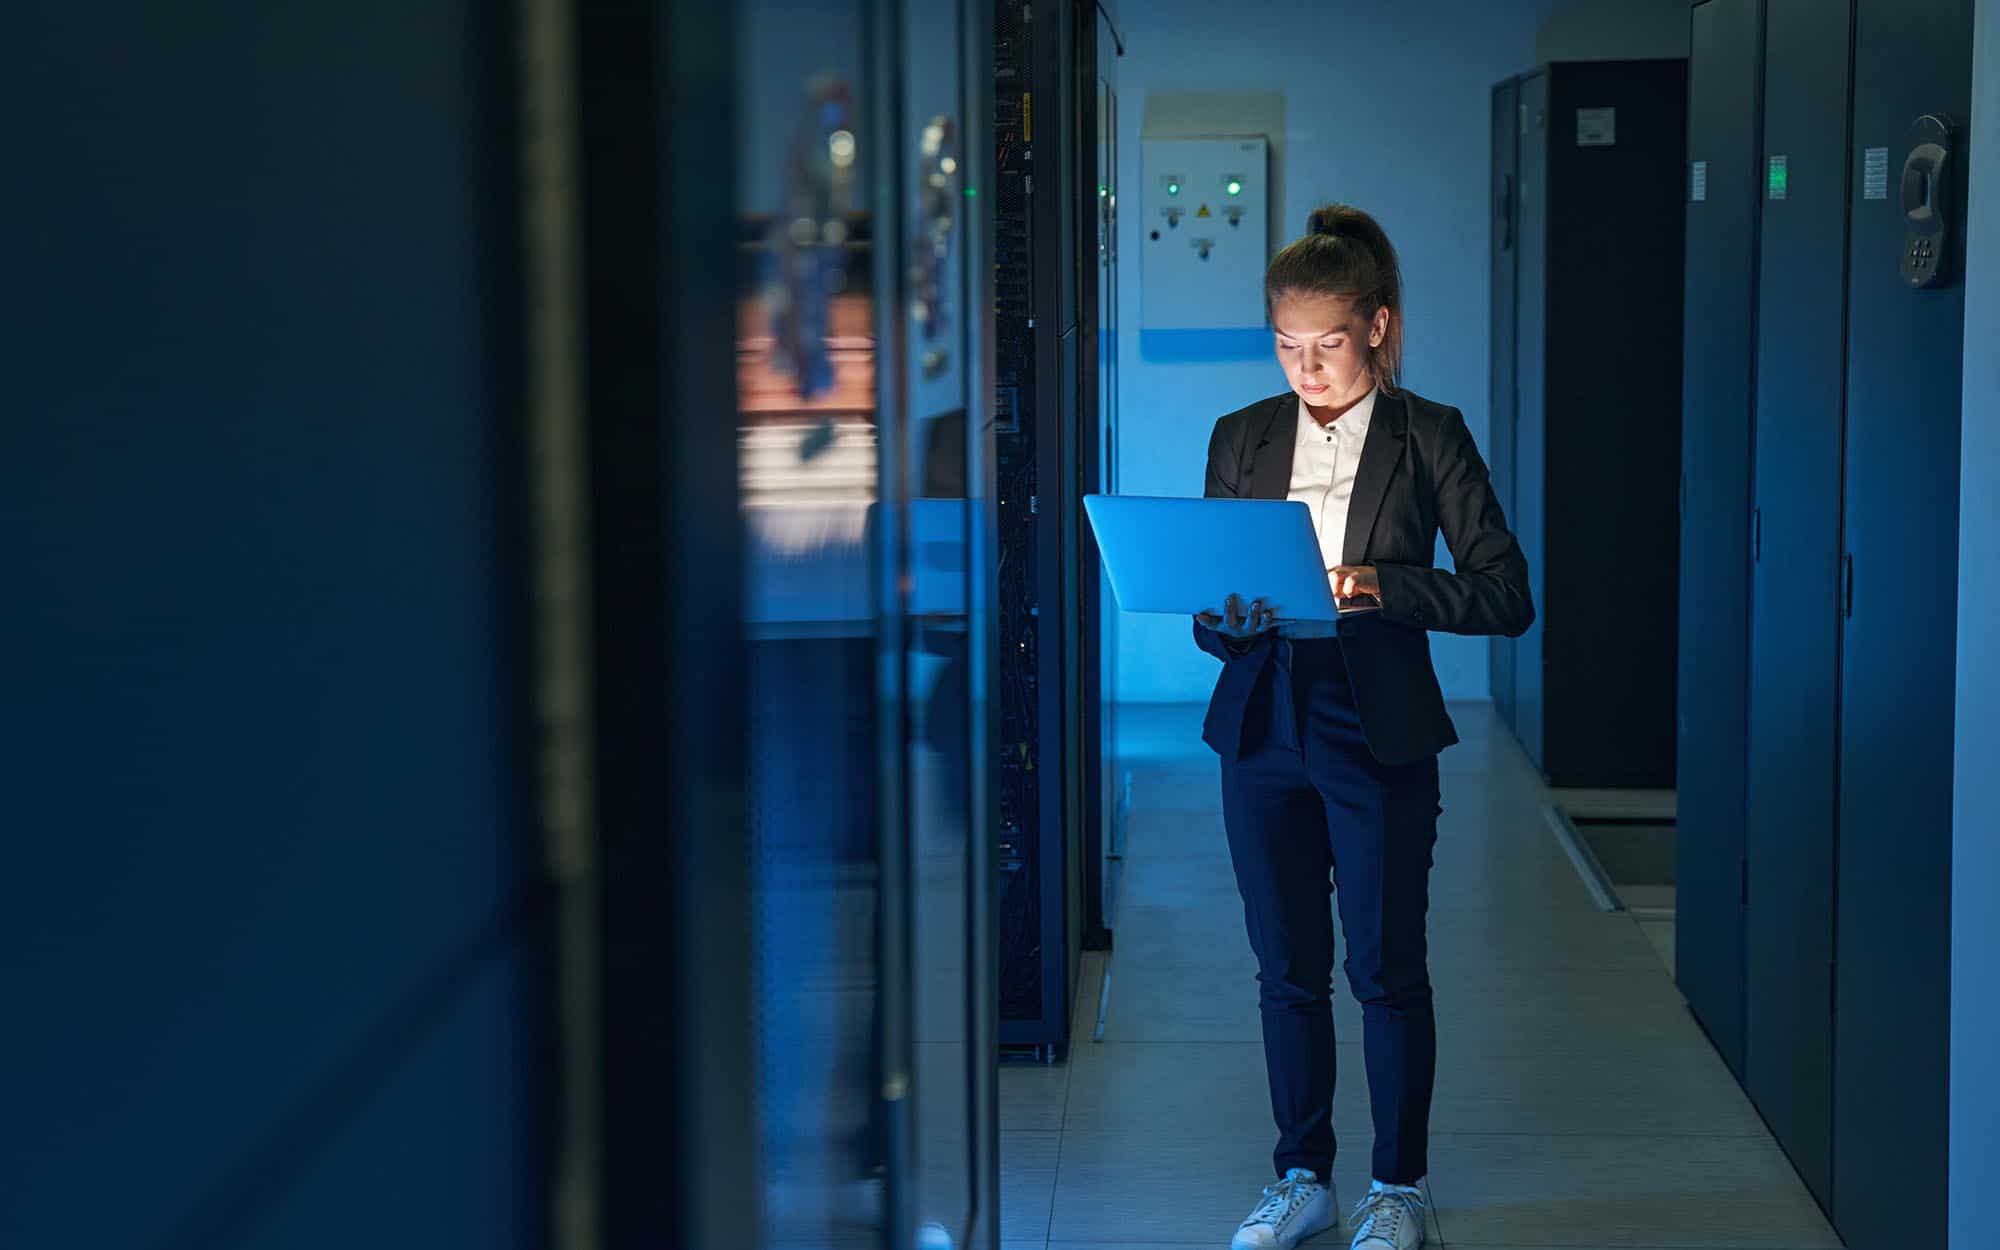 Female technician using laptop to analyze server in data center